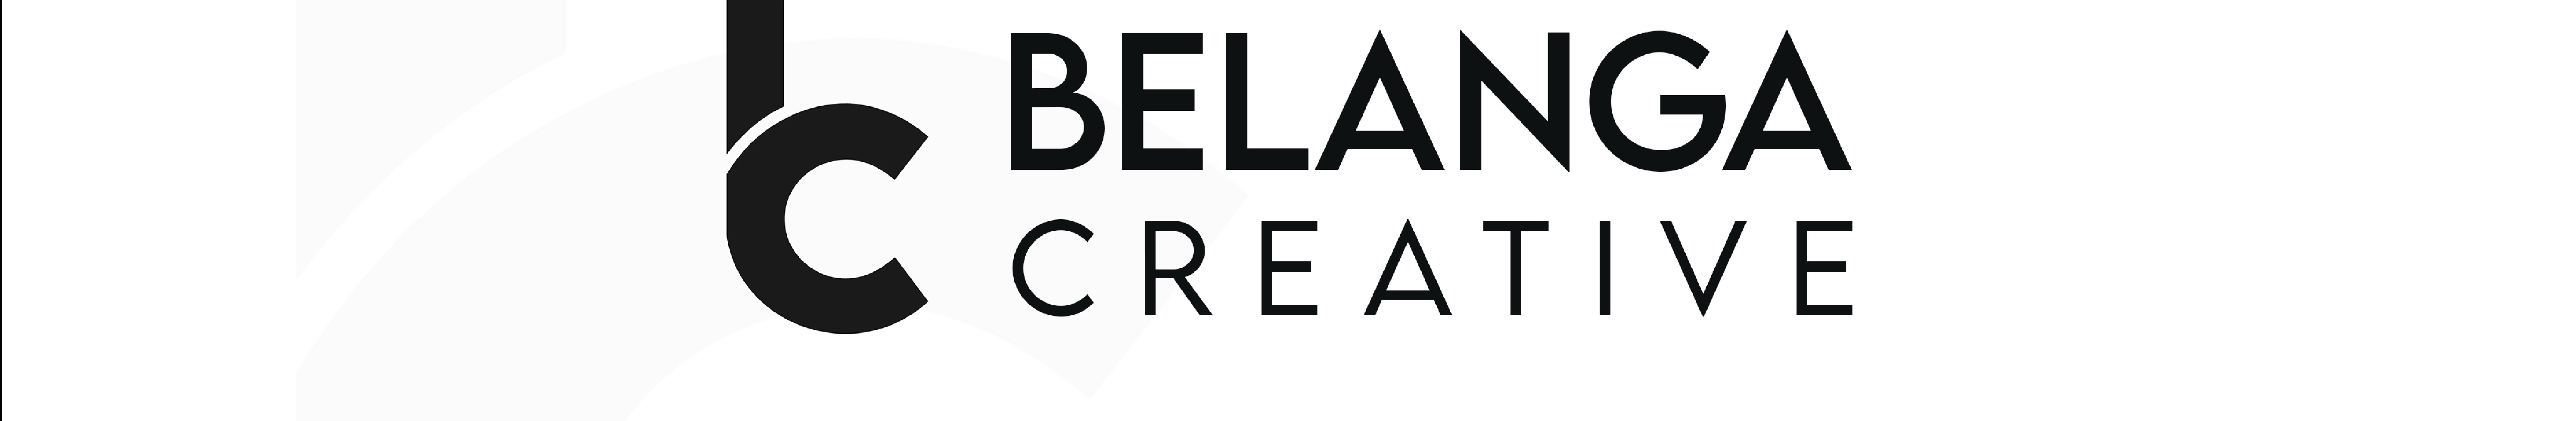 belanga creative's profile banner